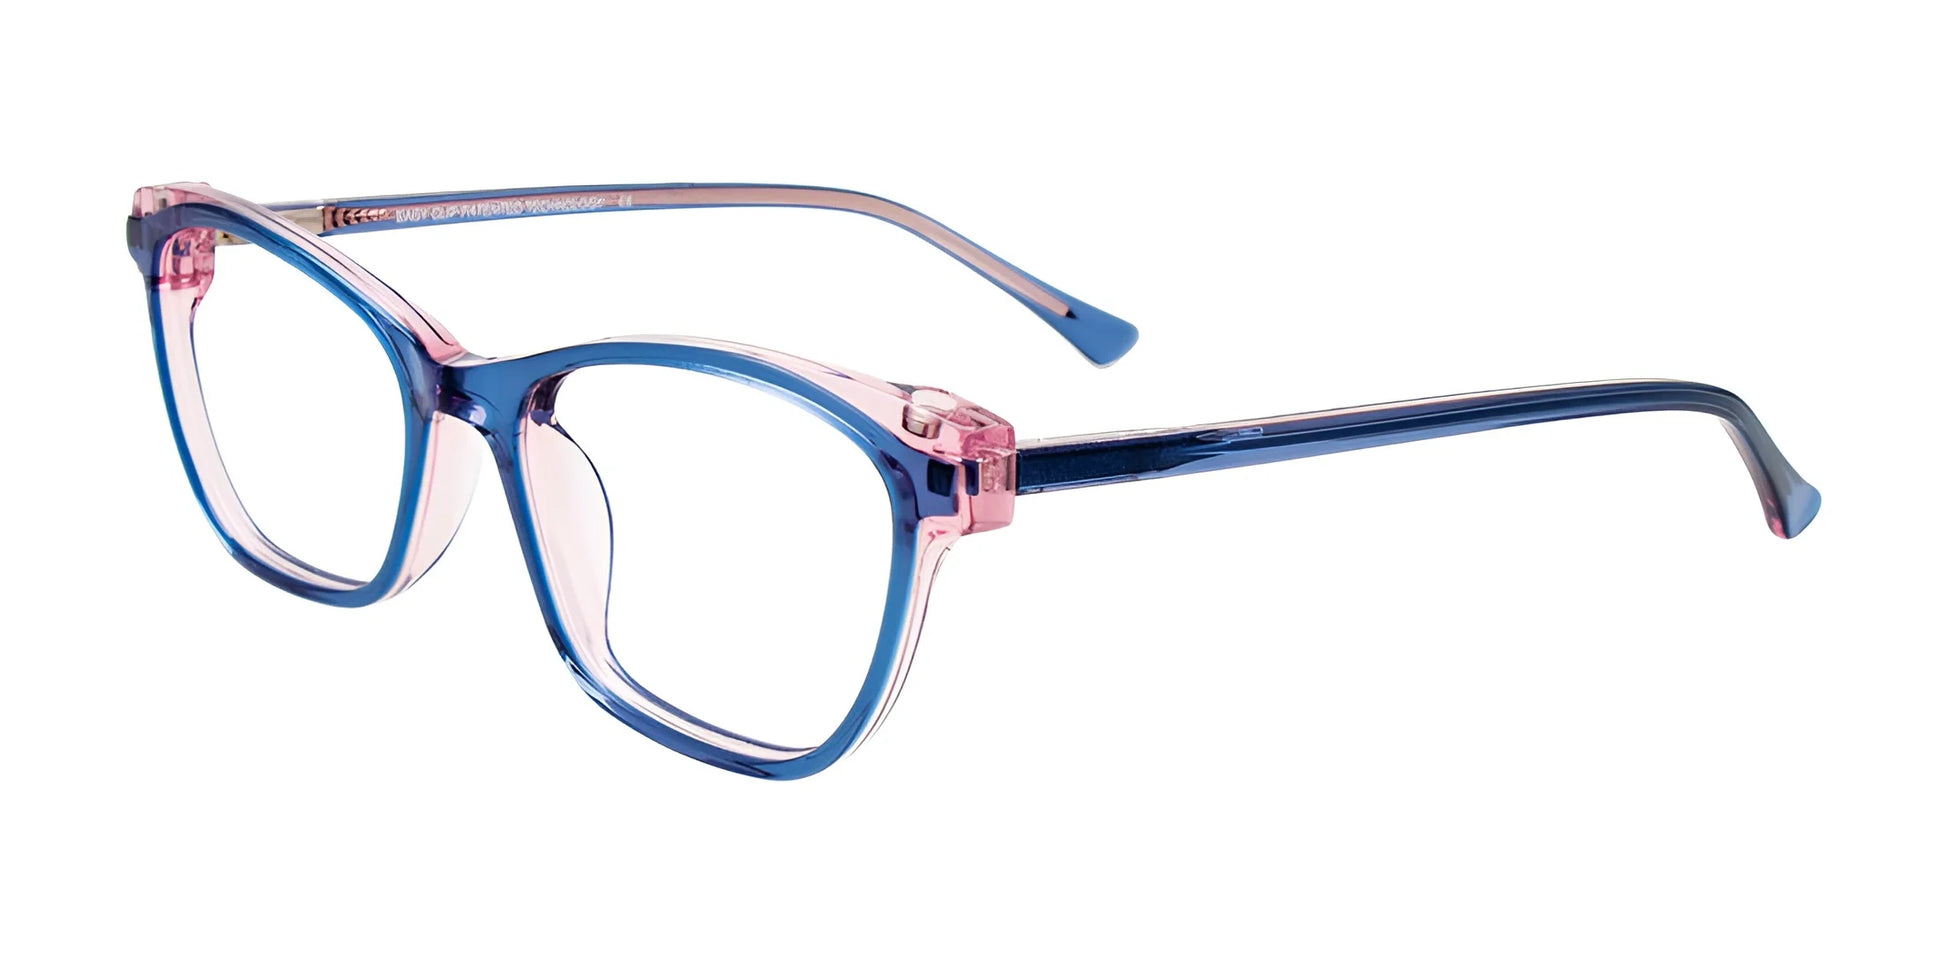 EasyClip EC582 Eyeglasses with Clip-on Sunglasses Blue & Crystal Pink